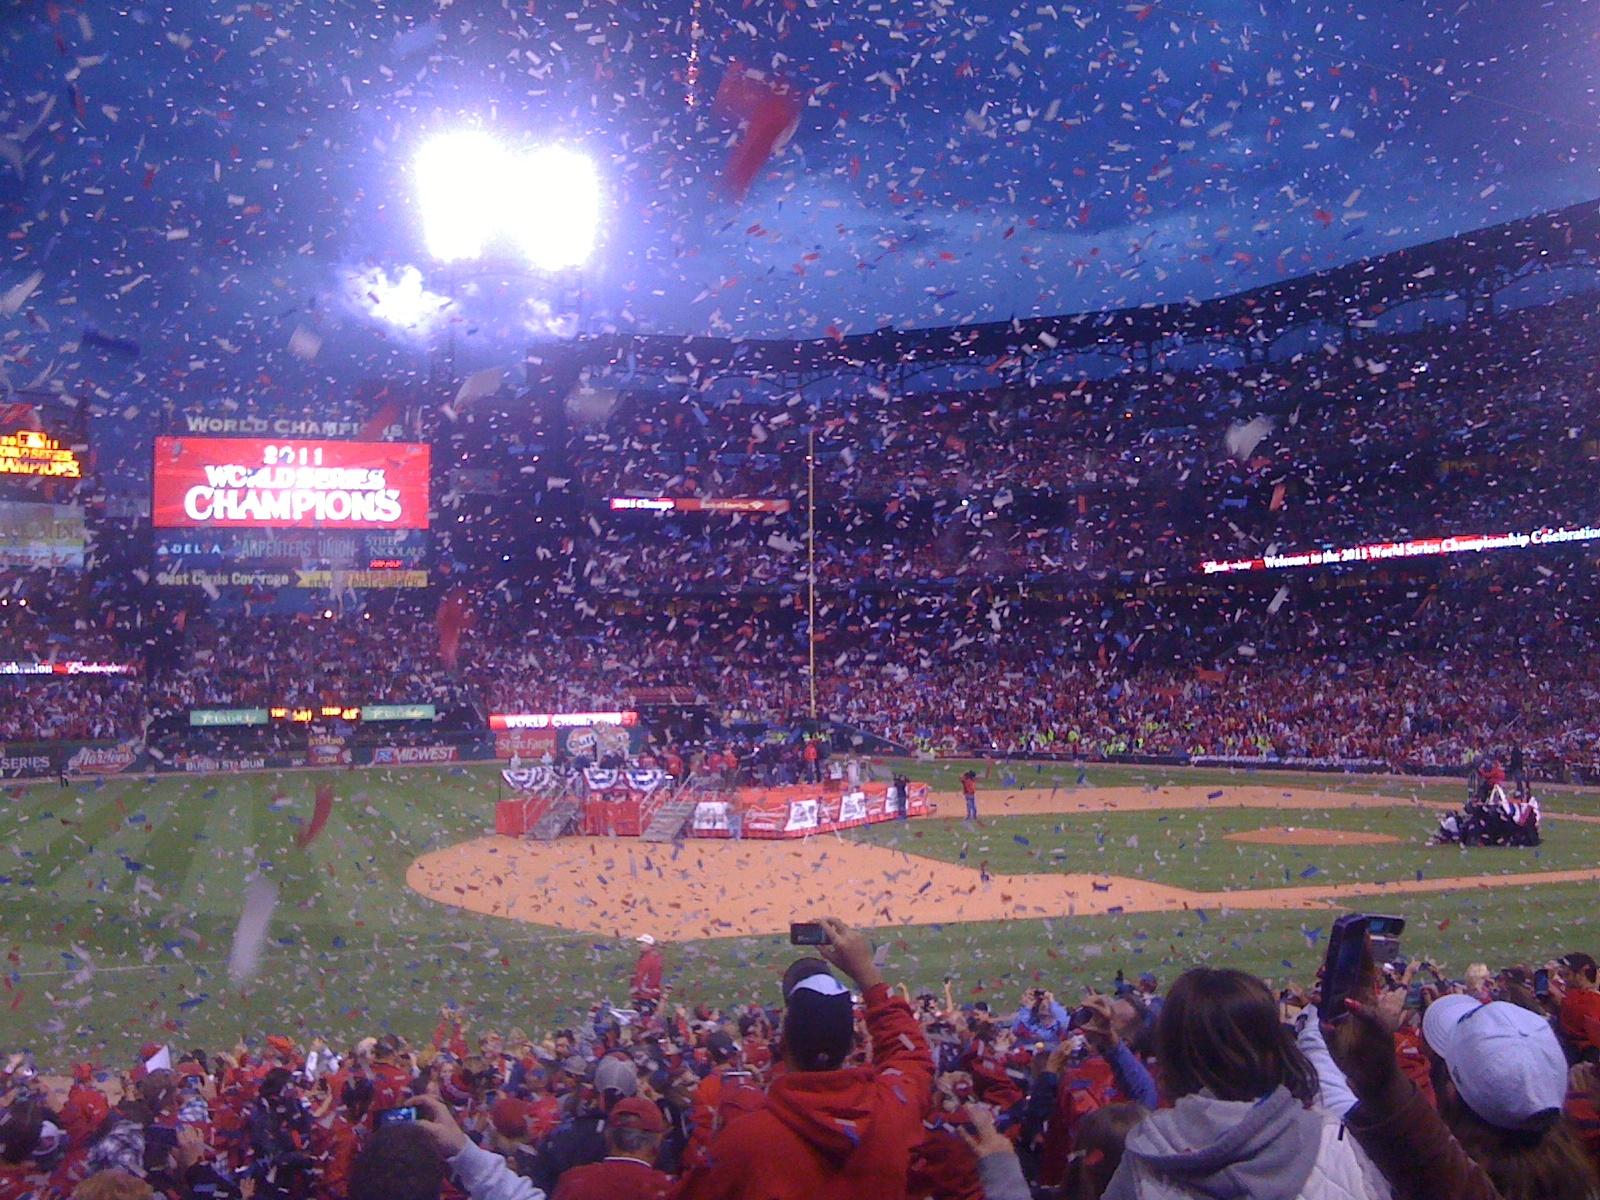 2011 Saint Louis Cardinals World Champions Celebration